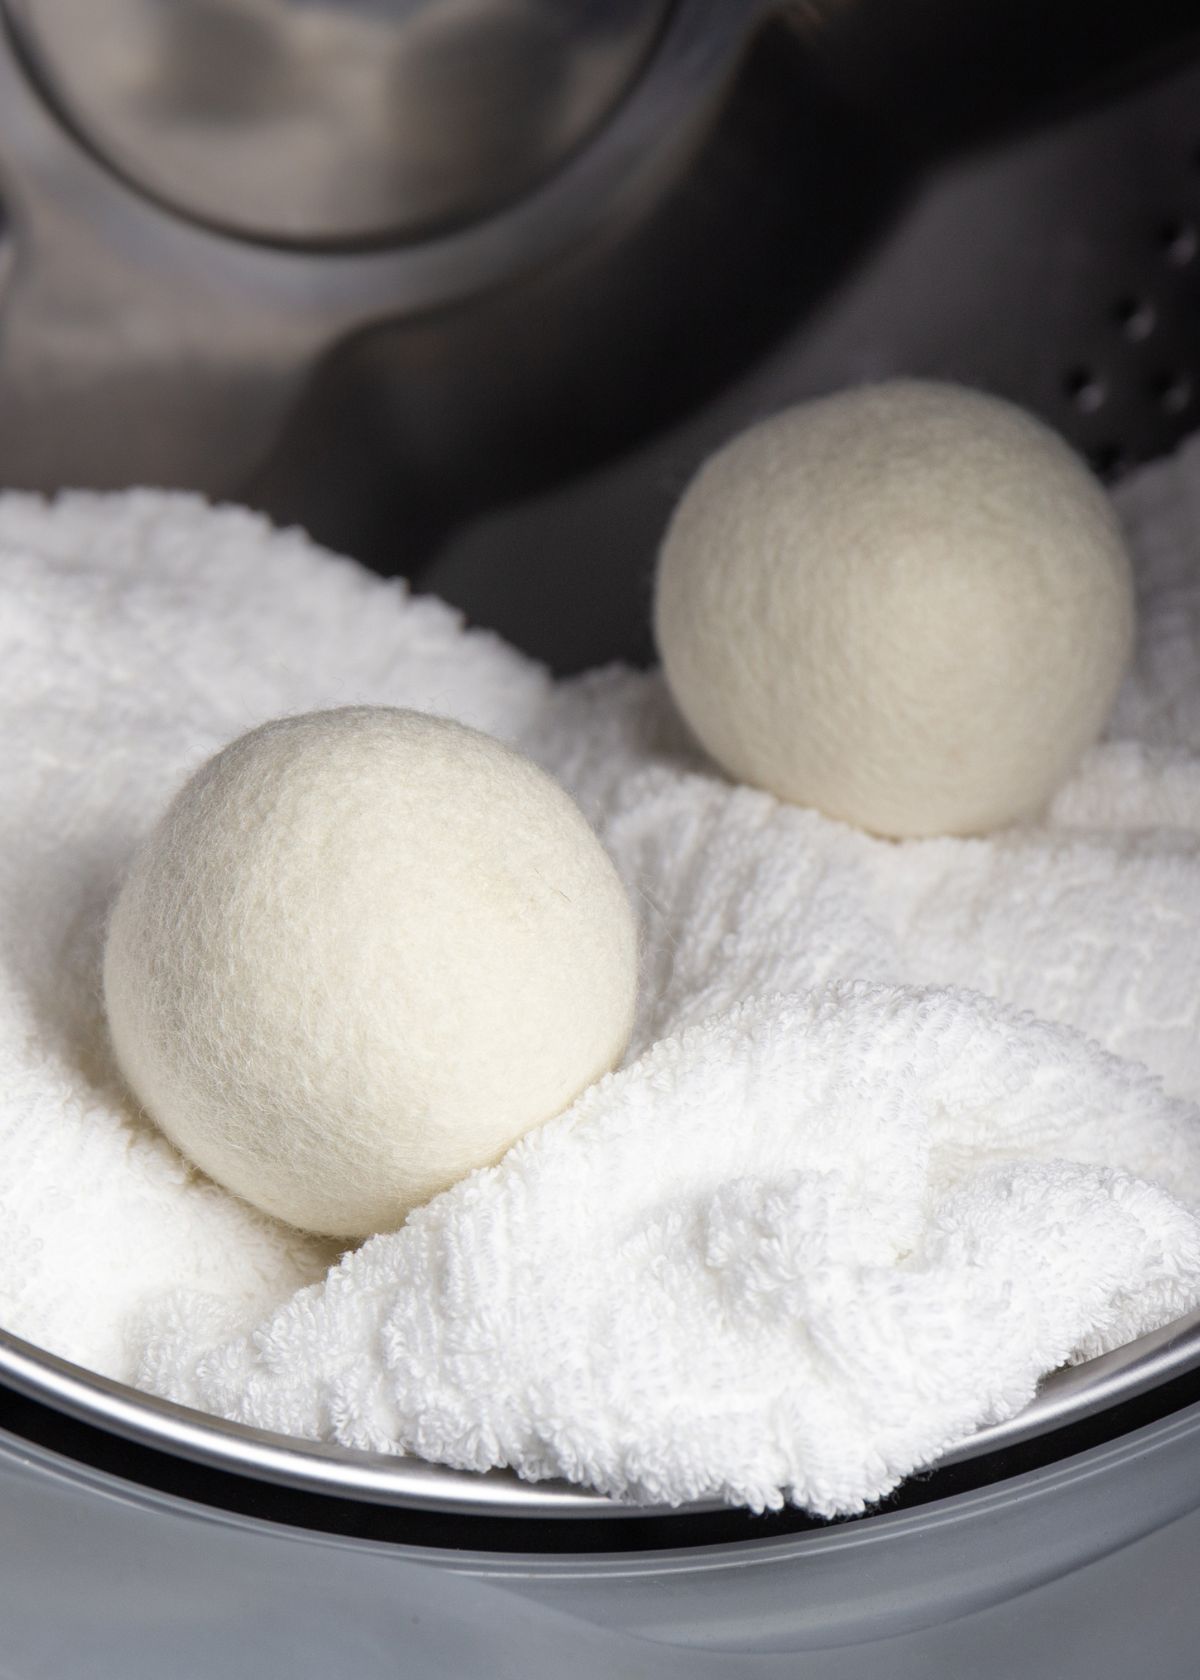 Wool Dryer Balls vs. Dryer Sheets